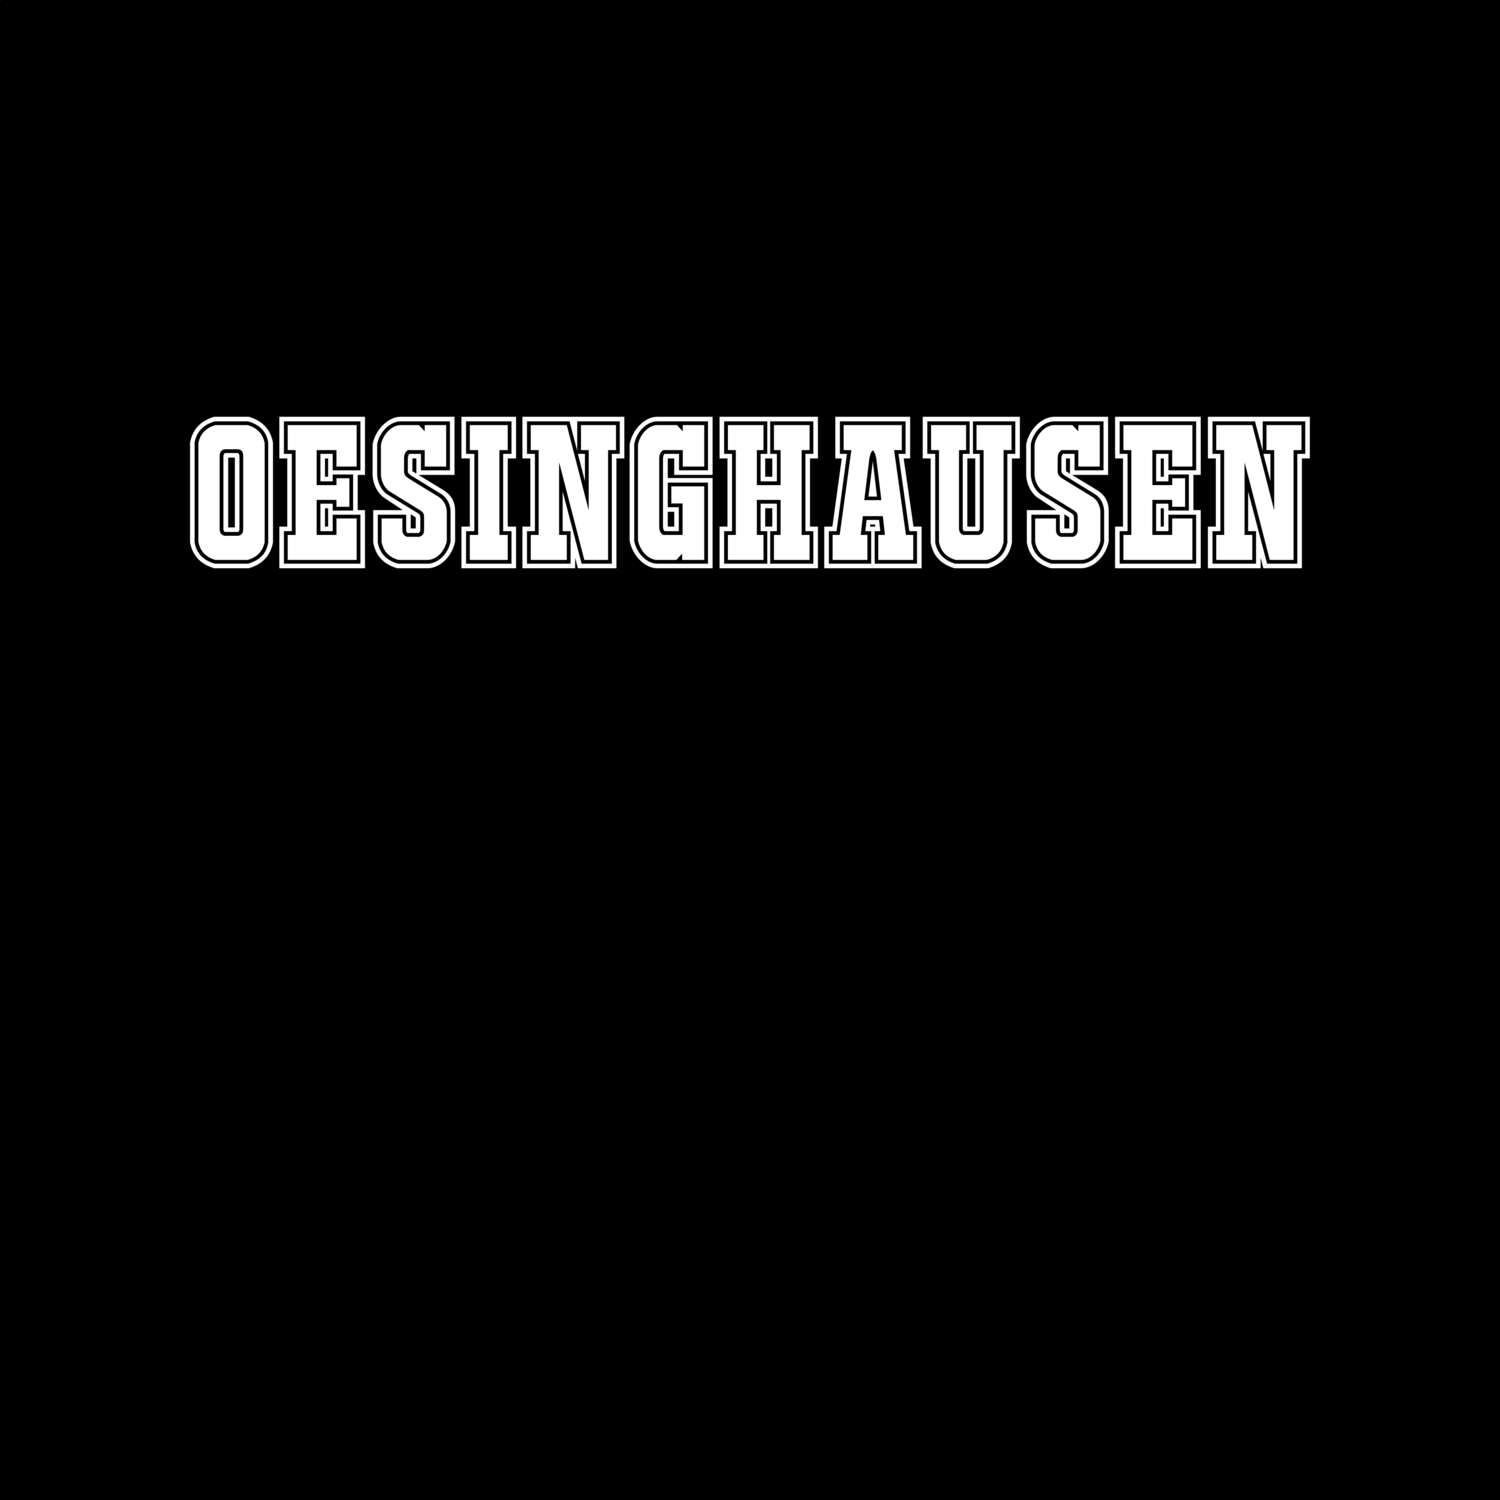 Oesinghausen T-Shirt »Classic«